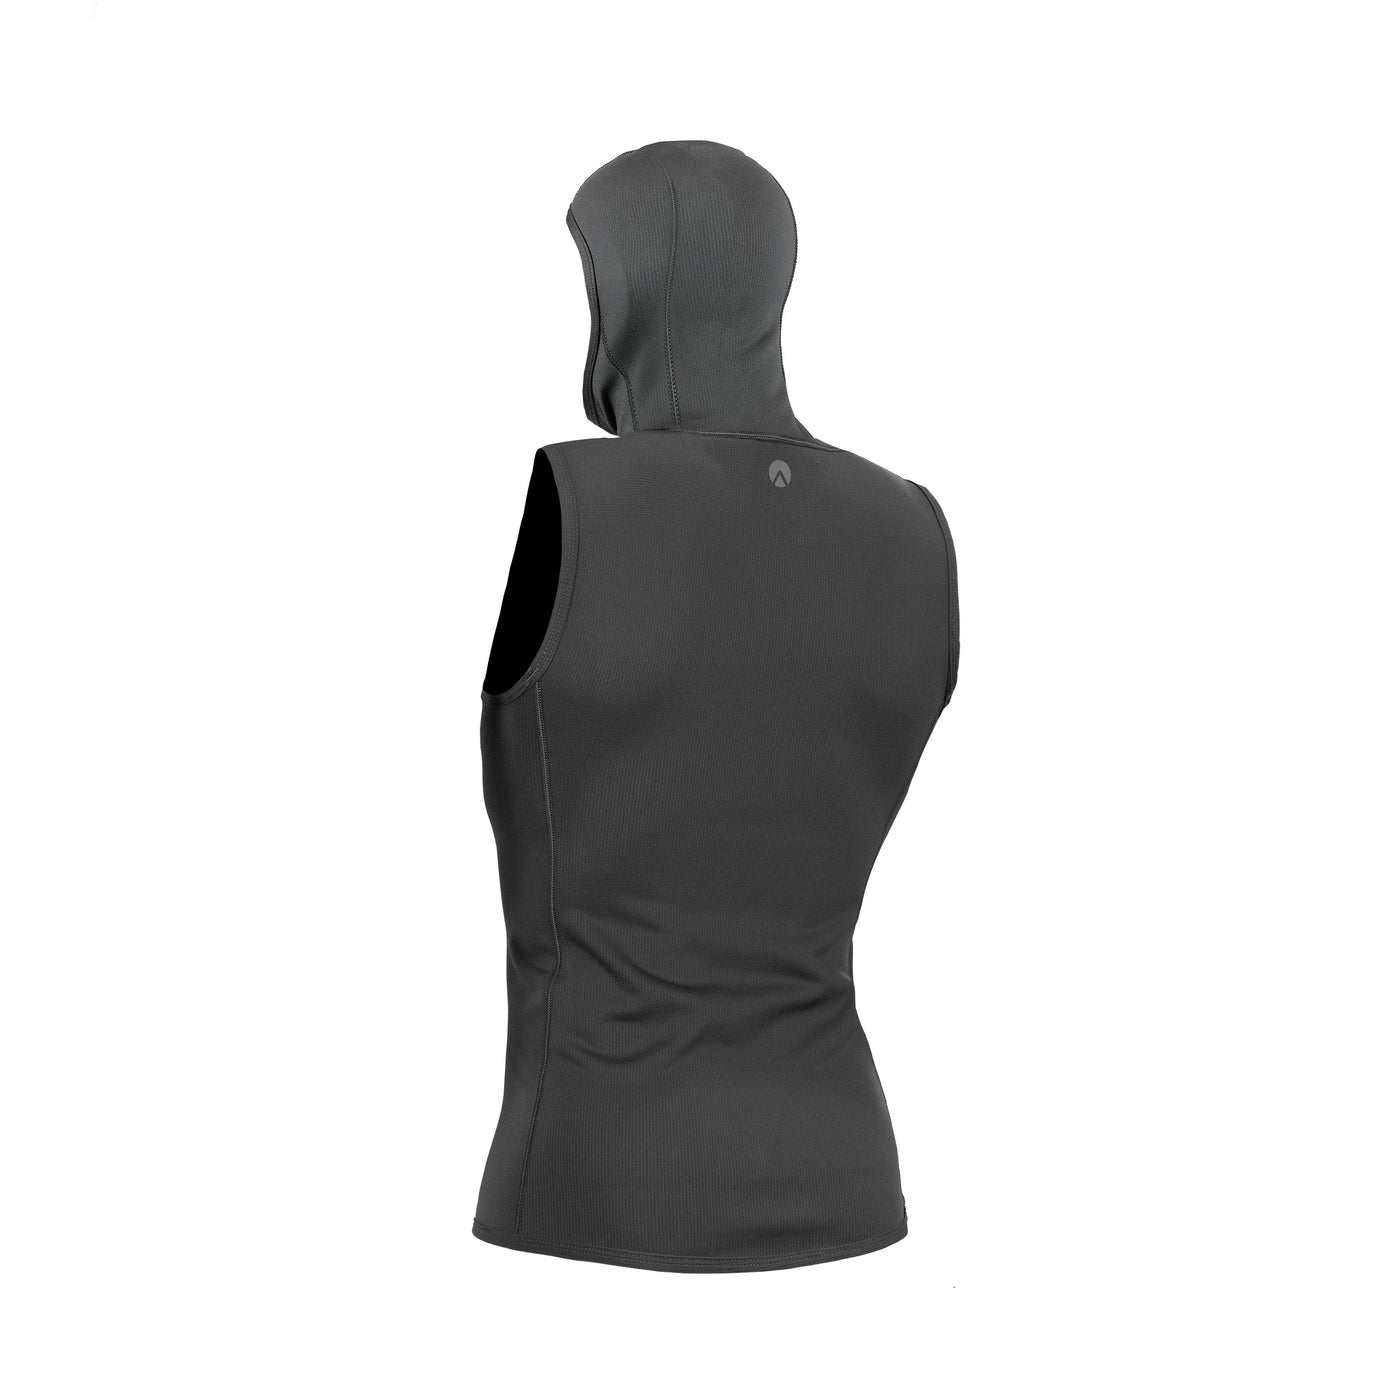 Titanium 2 Vest with Hood (Male)